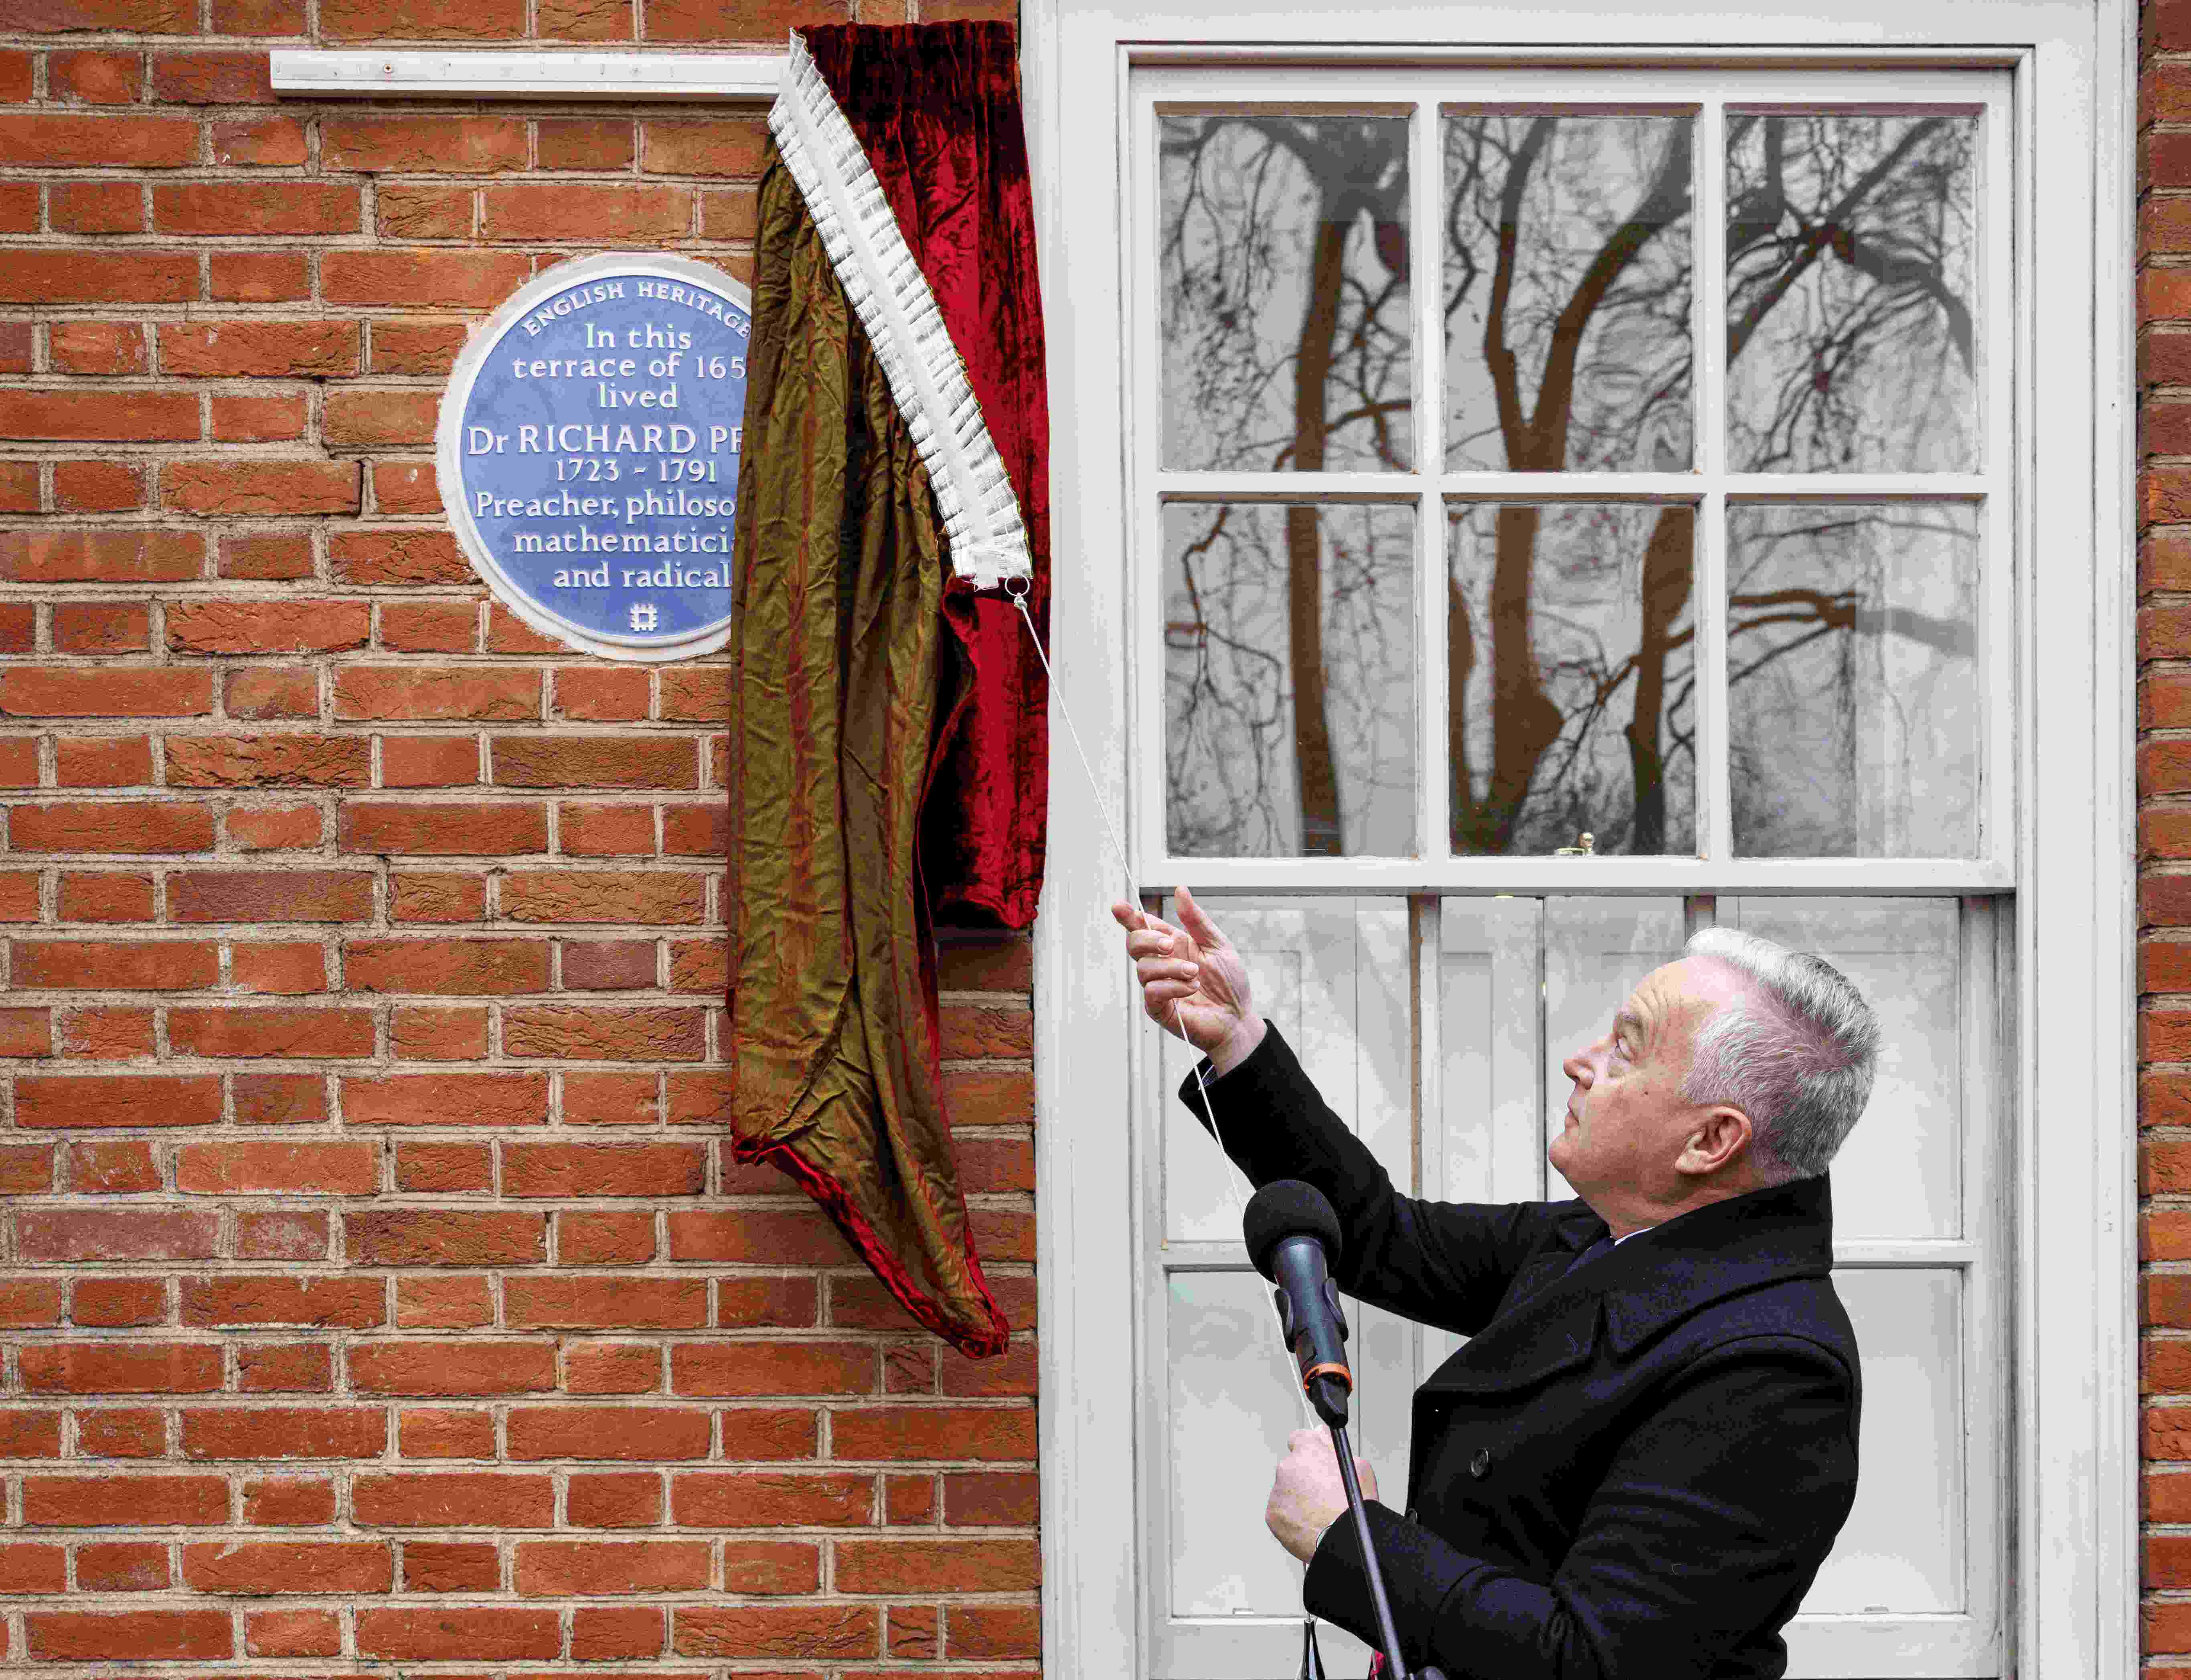 Broadcaster Huw Edwards unveils Dr Richard Price's blue plaque